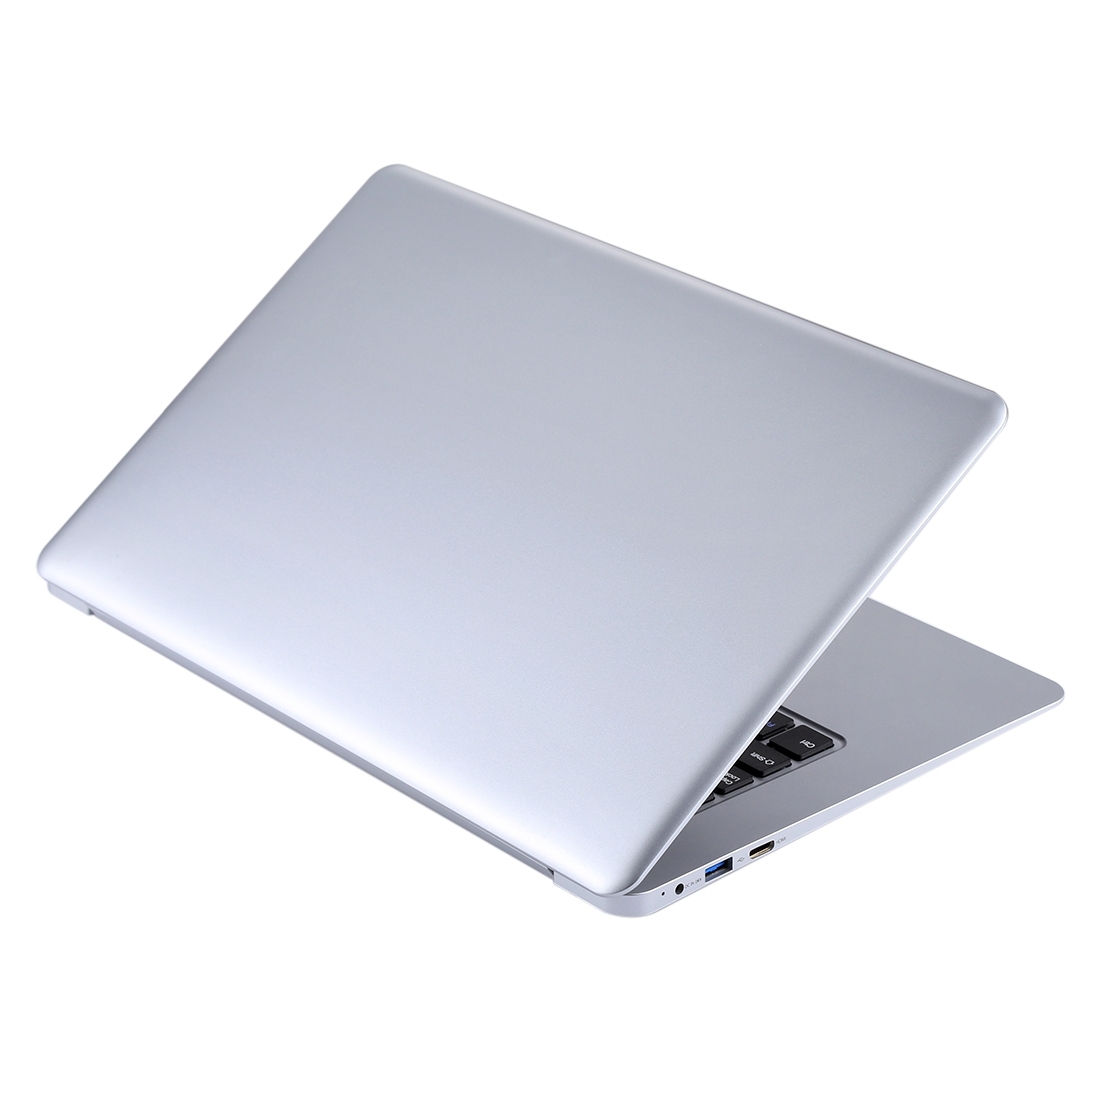 HPC156 Ultrabook, 15.6 inch, 4GB+64GB, Windows 10 Intel X5-Z8350 Quad Core Up to 1.92Ghz, Support TF Card & Bluetooth & WiFi, US/EU Plug (Silver)